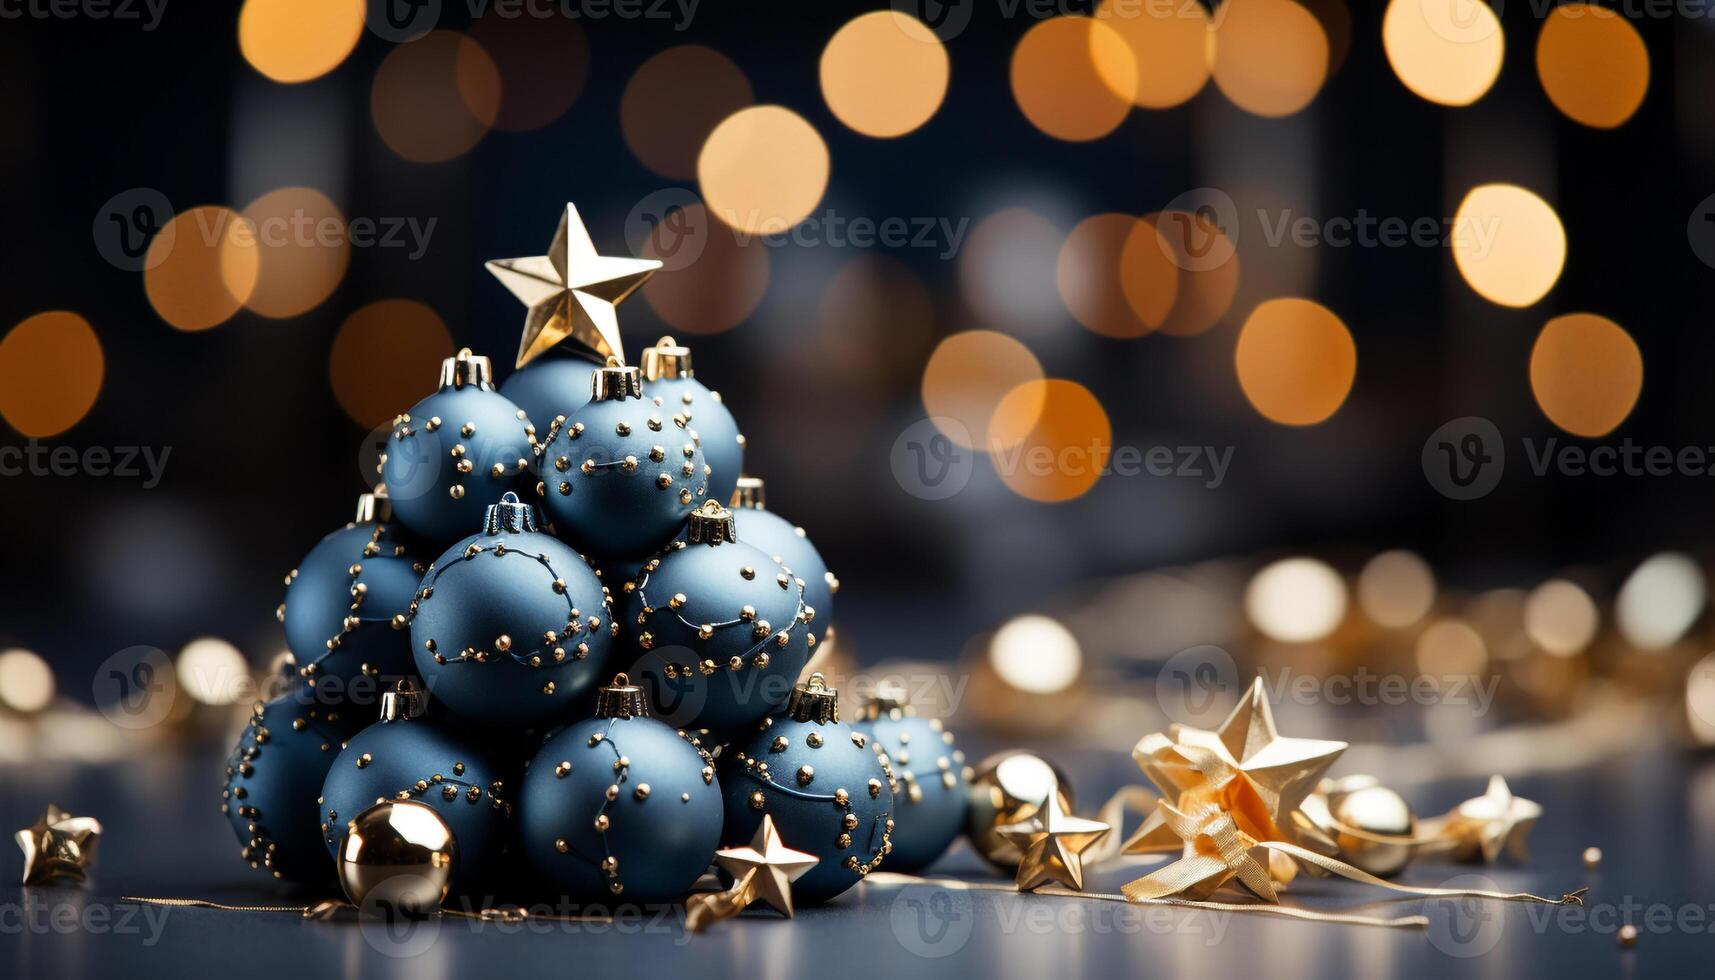 AI generated Shiny gold ornament glows, illuminating dark winter celebration generated by AI photo